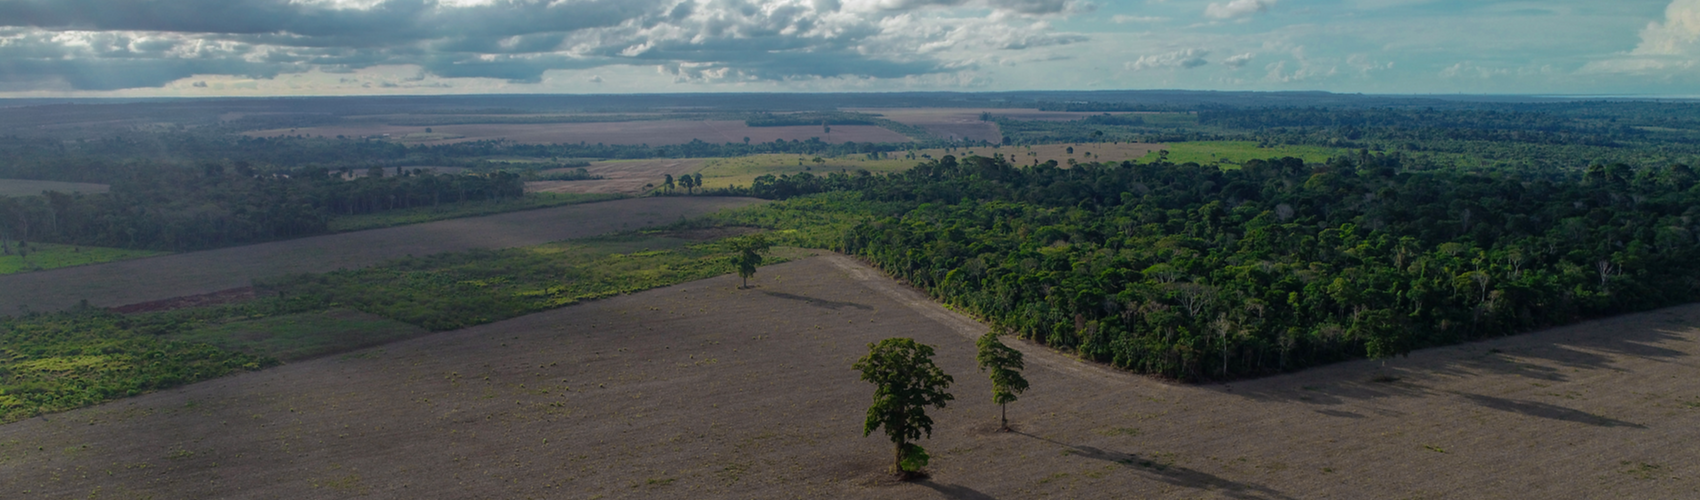 Cargill compra soja de fazendas sobrepostas a terras indígenas no Pará